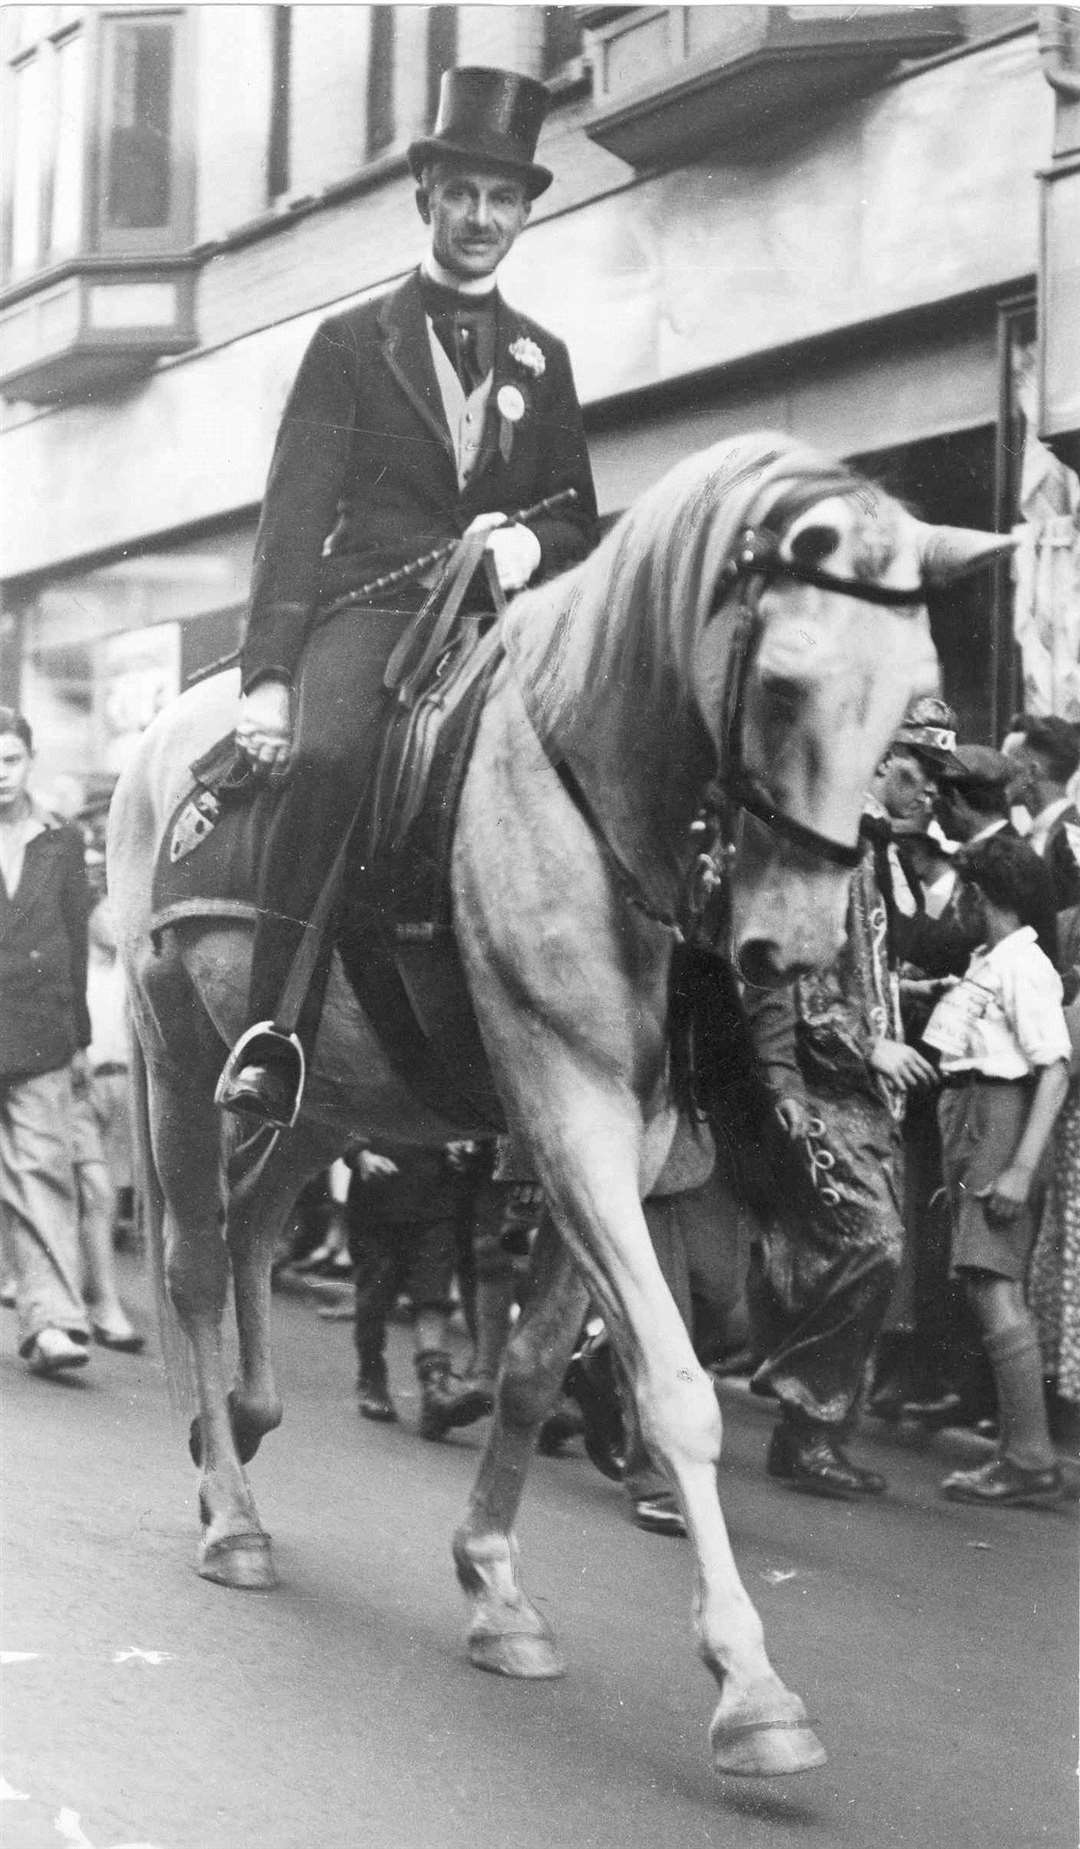 Sir Garrard Tyrwhitt-Drake loved carriages but didn't ride in them very often